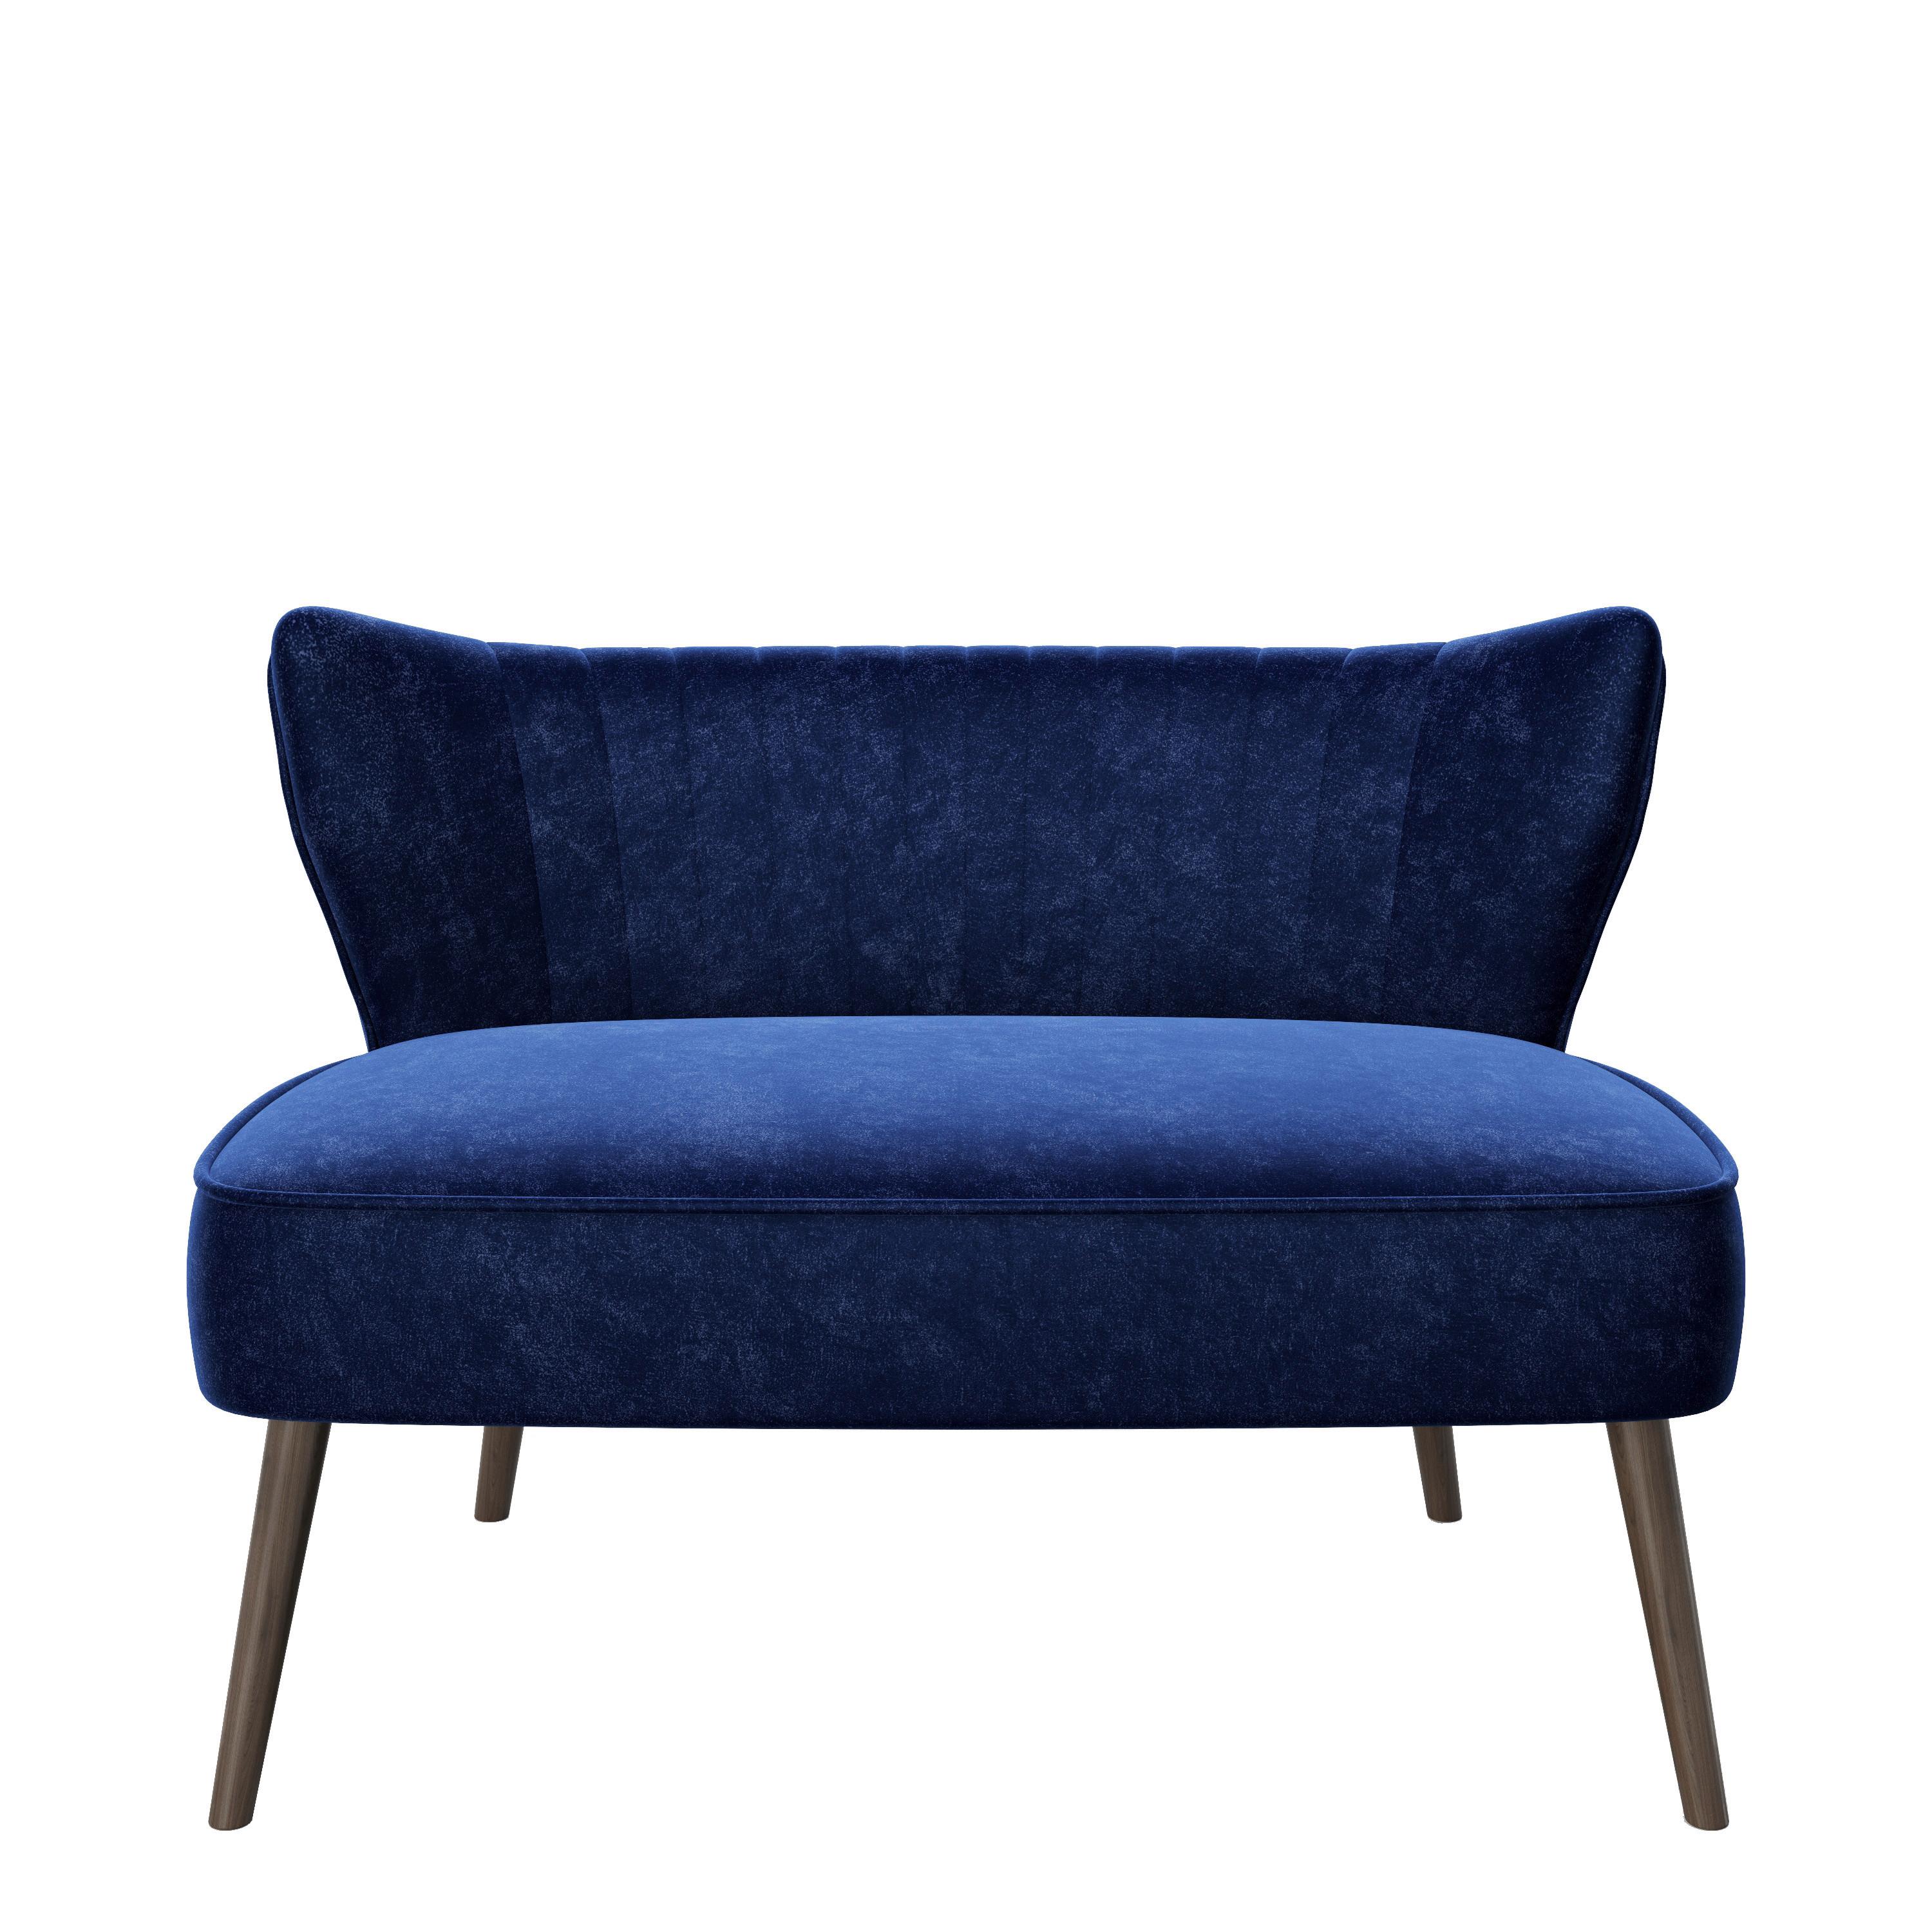 2-Sitzer-Sofa Kelly Blau Vintage-Style - Blau/Akaziefarben, KONVENTIONELL, Textil (112/76/73cm) - Playboy